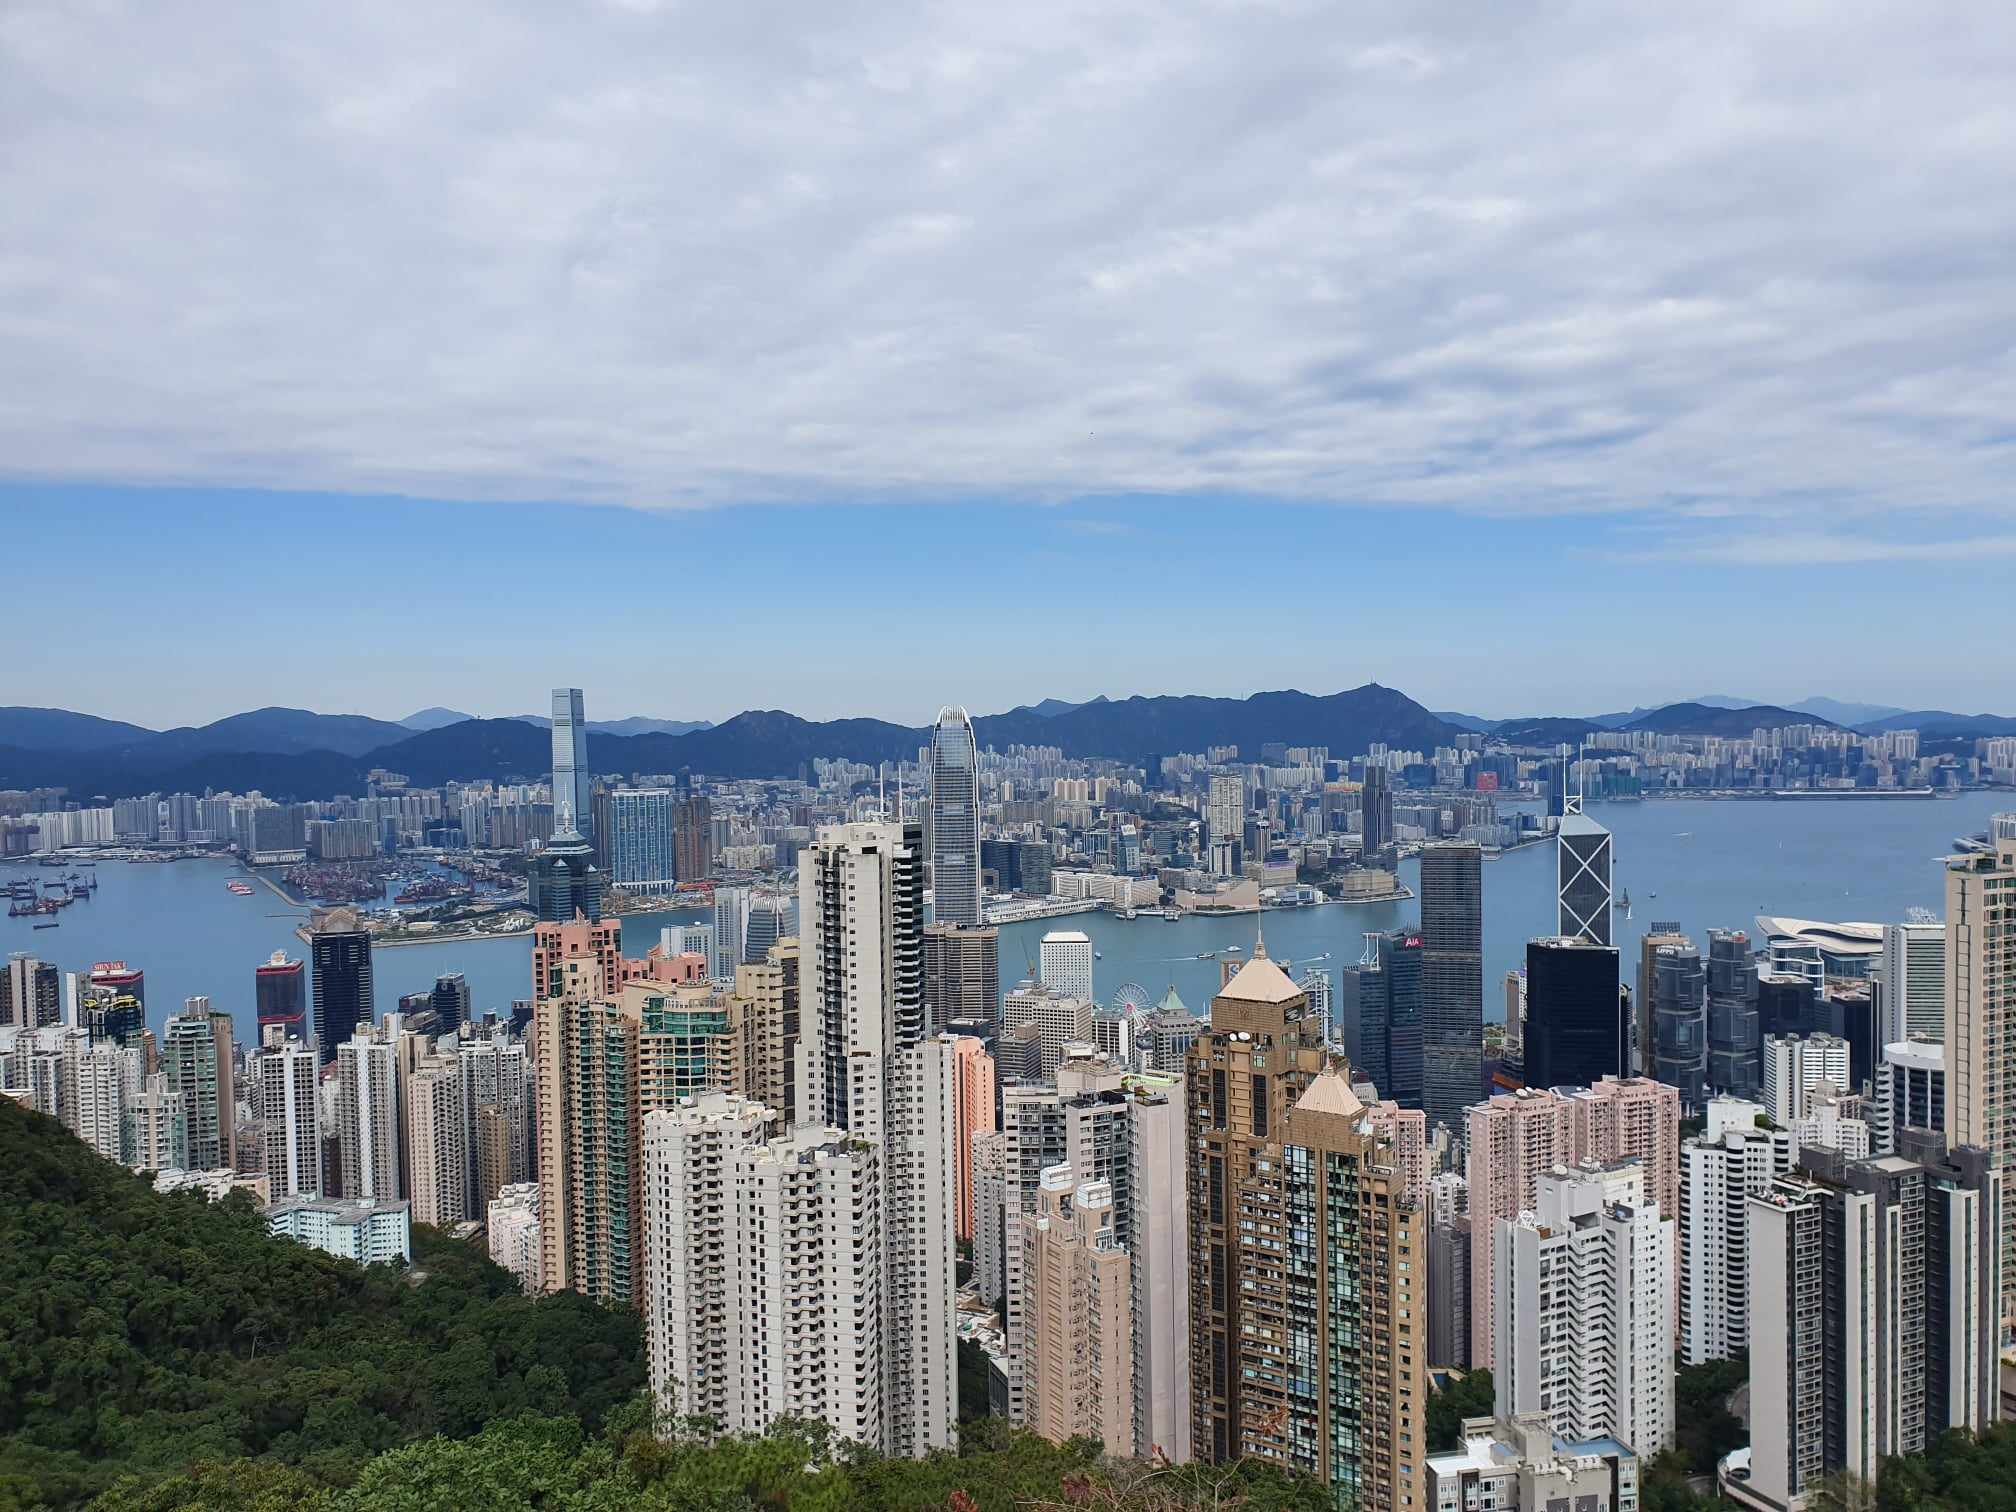 Hong Kong skyline from The Peak